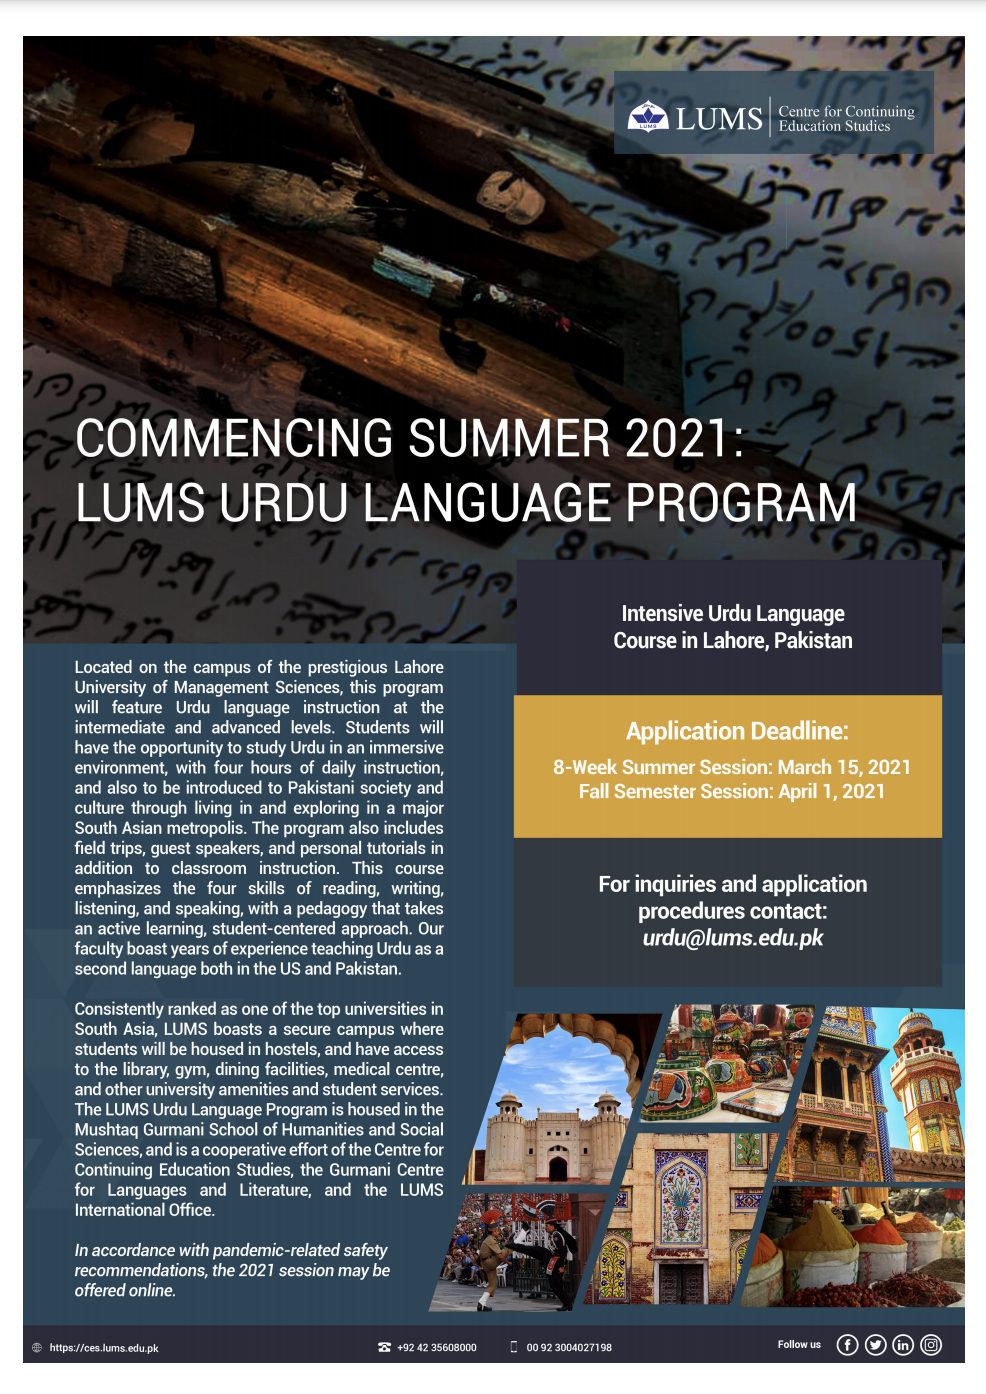 Flyer explaing LUMS Urdu Language Program opportunity. Email urdu@lums.edu.pk for more information on the program